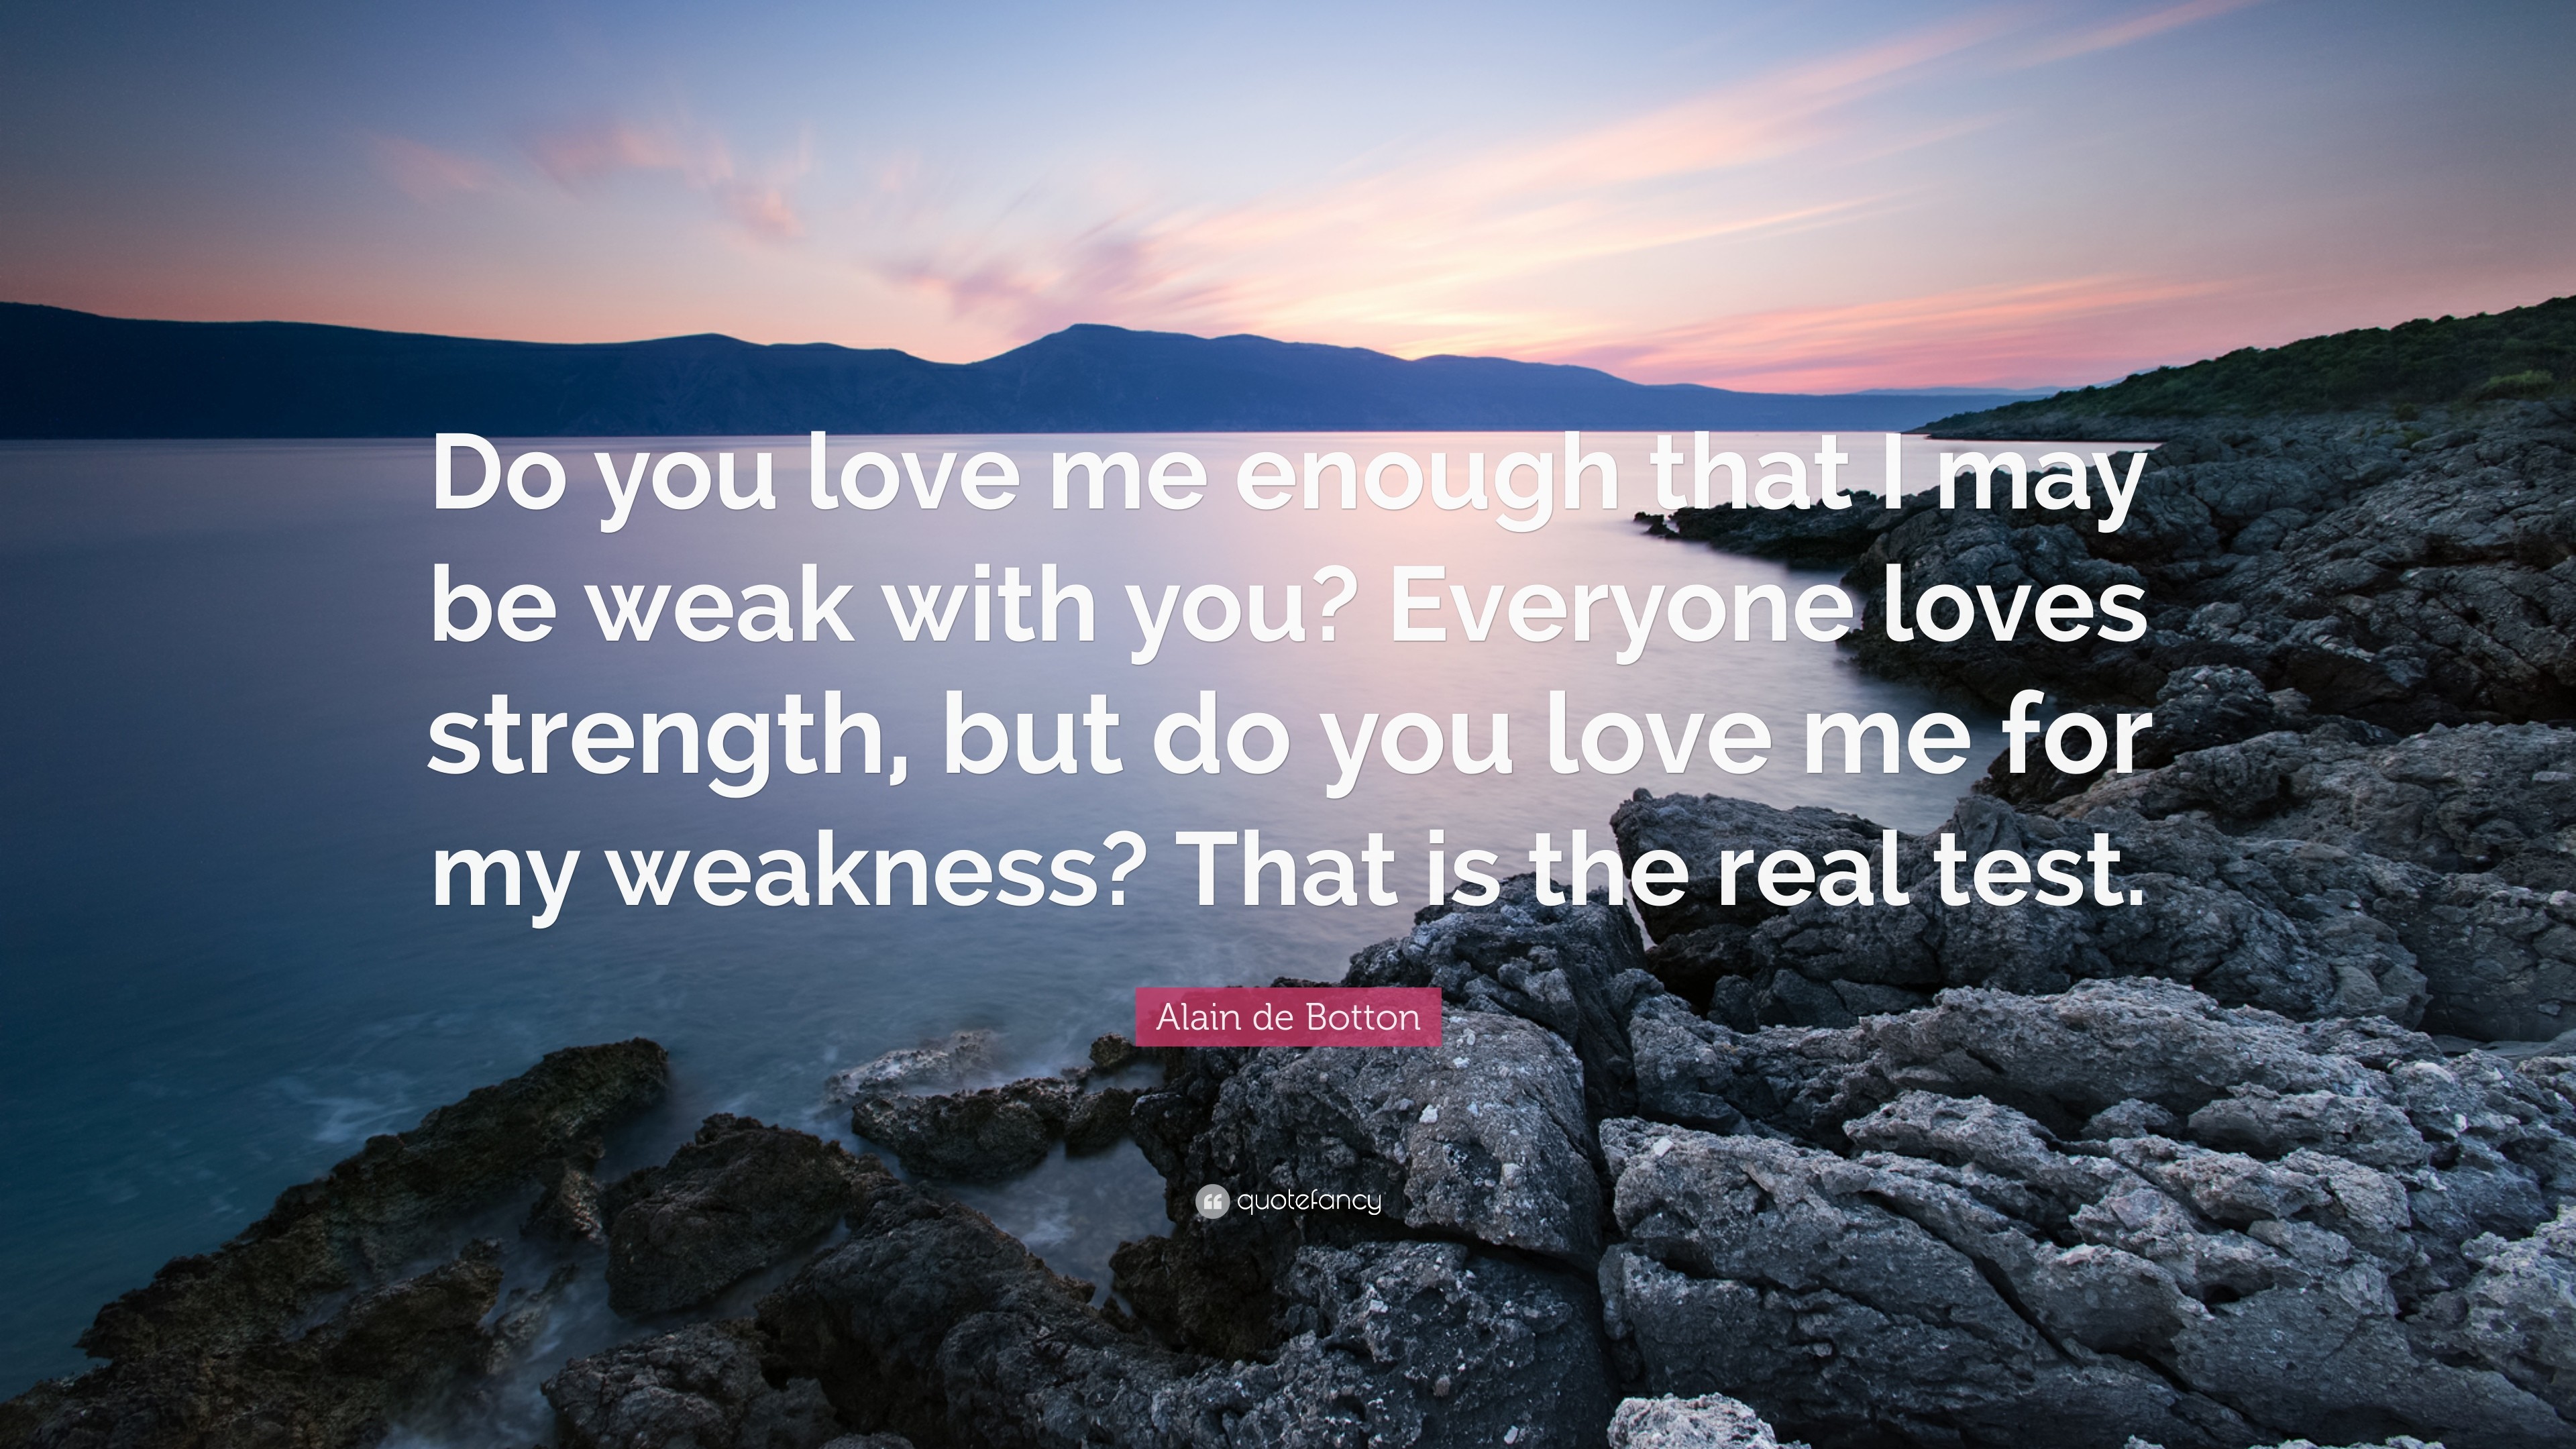 3840x2160 Alain de Botton Quote: “Do you love me enough that I may be weak